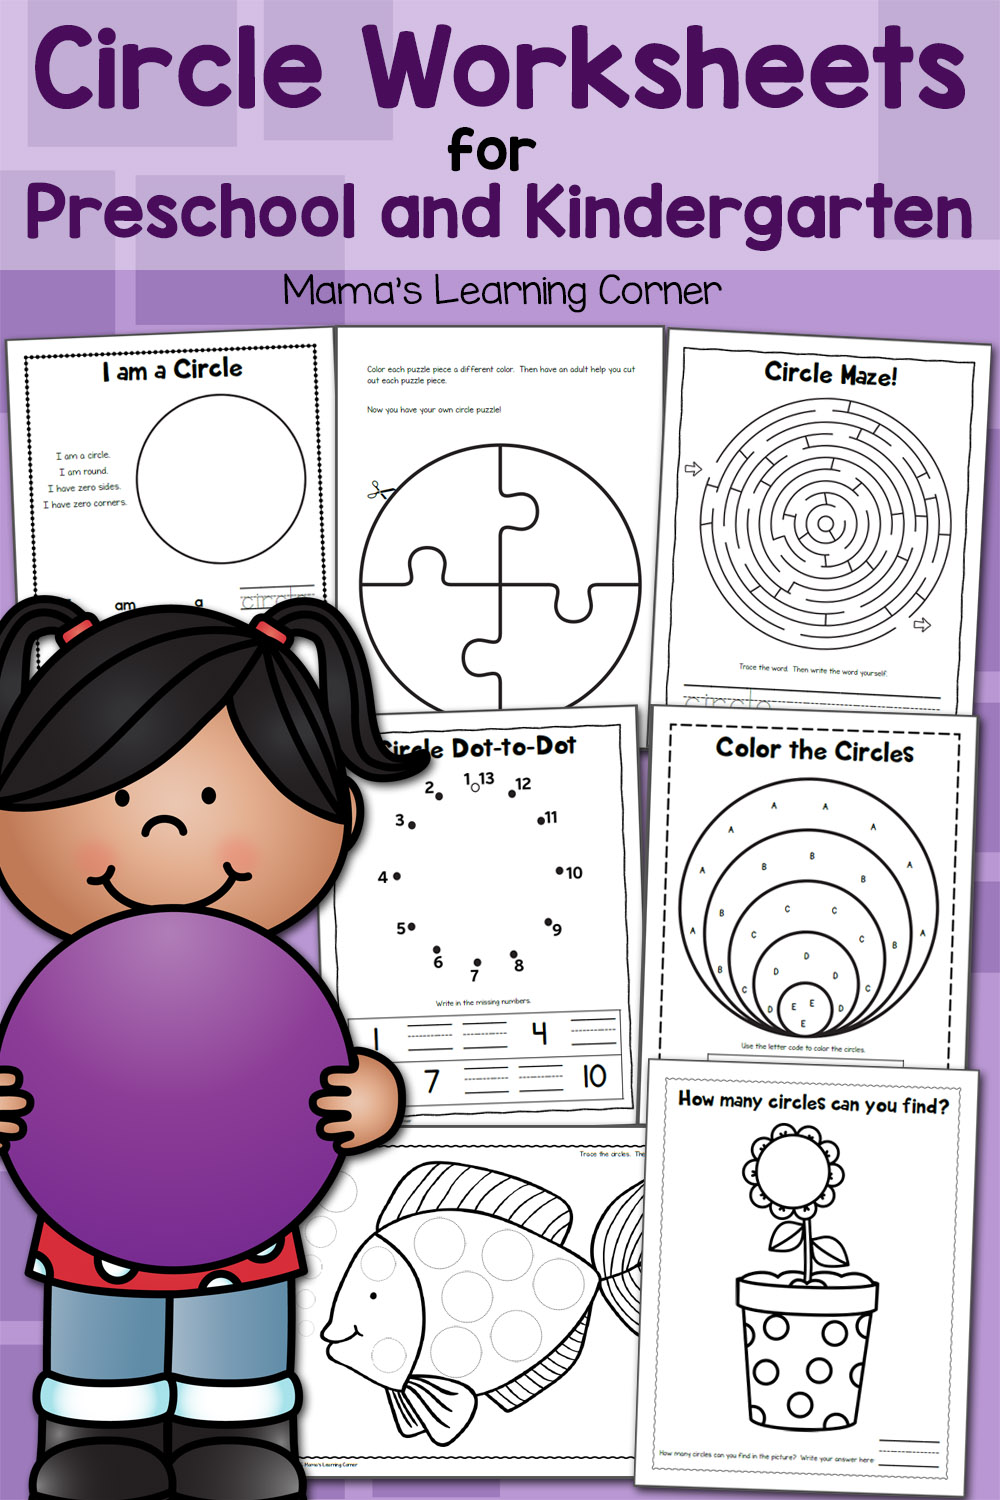 Circle Worksheets For Preschool And Kindergarten